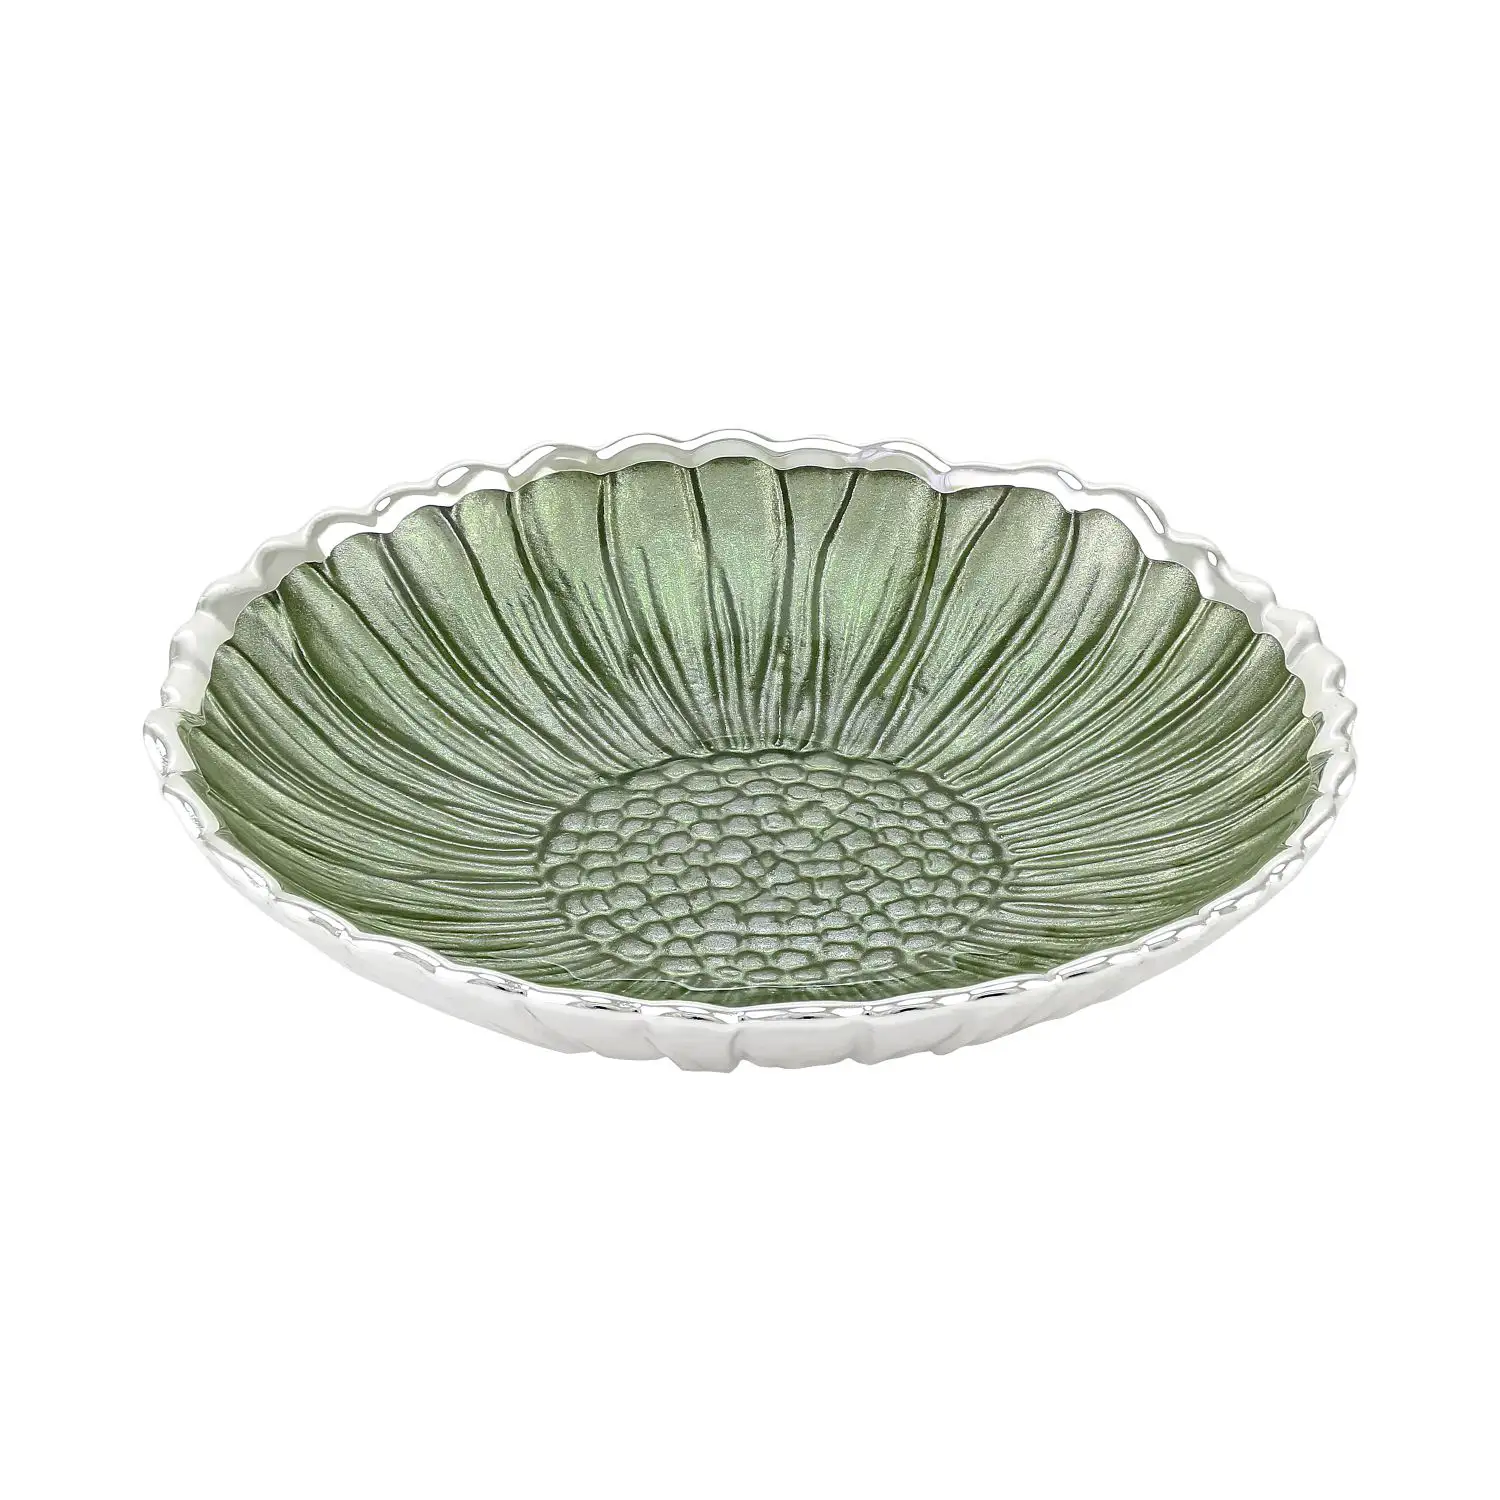 Тарелка стеклянная GIRASOLE (цвет зеленый) диаметр 14 см тарелка стеклянная girasole цвет песочный диаметр 14 см